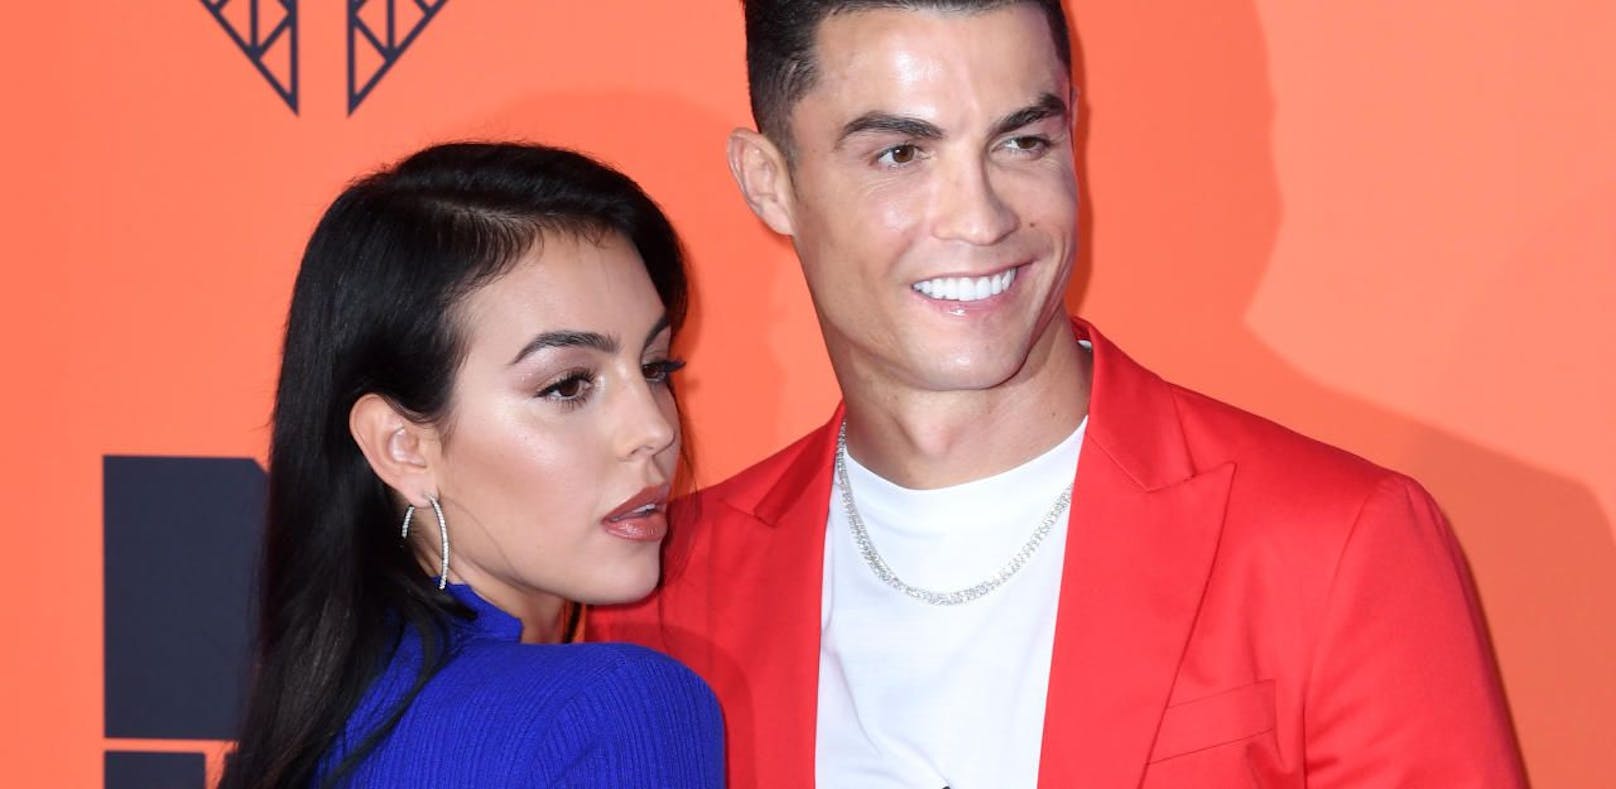 Cristiano Ronaldo und seine Freundin Georgina Rodriguez bei den MTV Europe Music Awards 2019 in Sevilla.